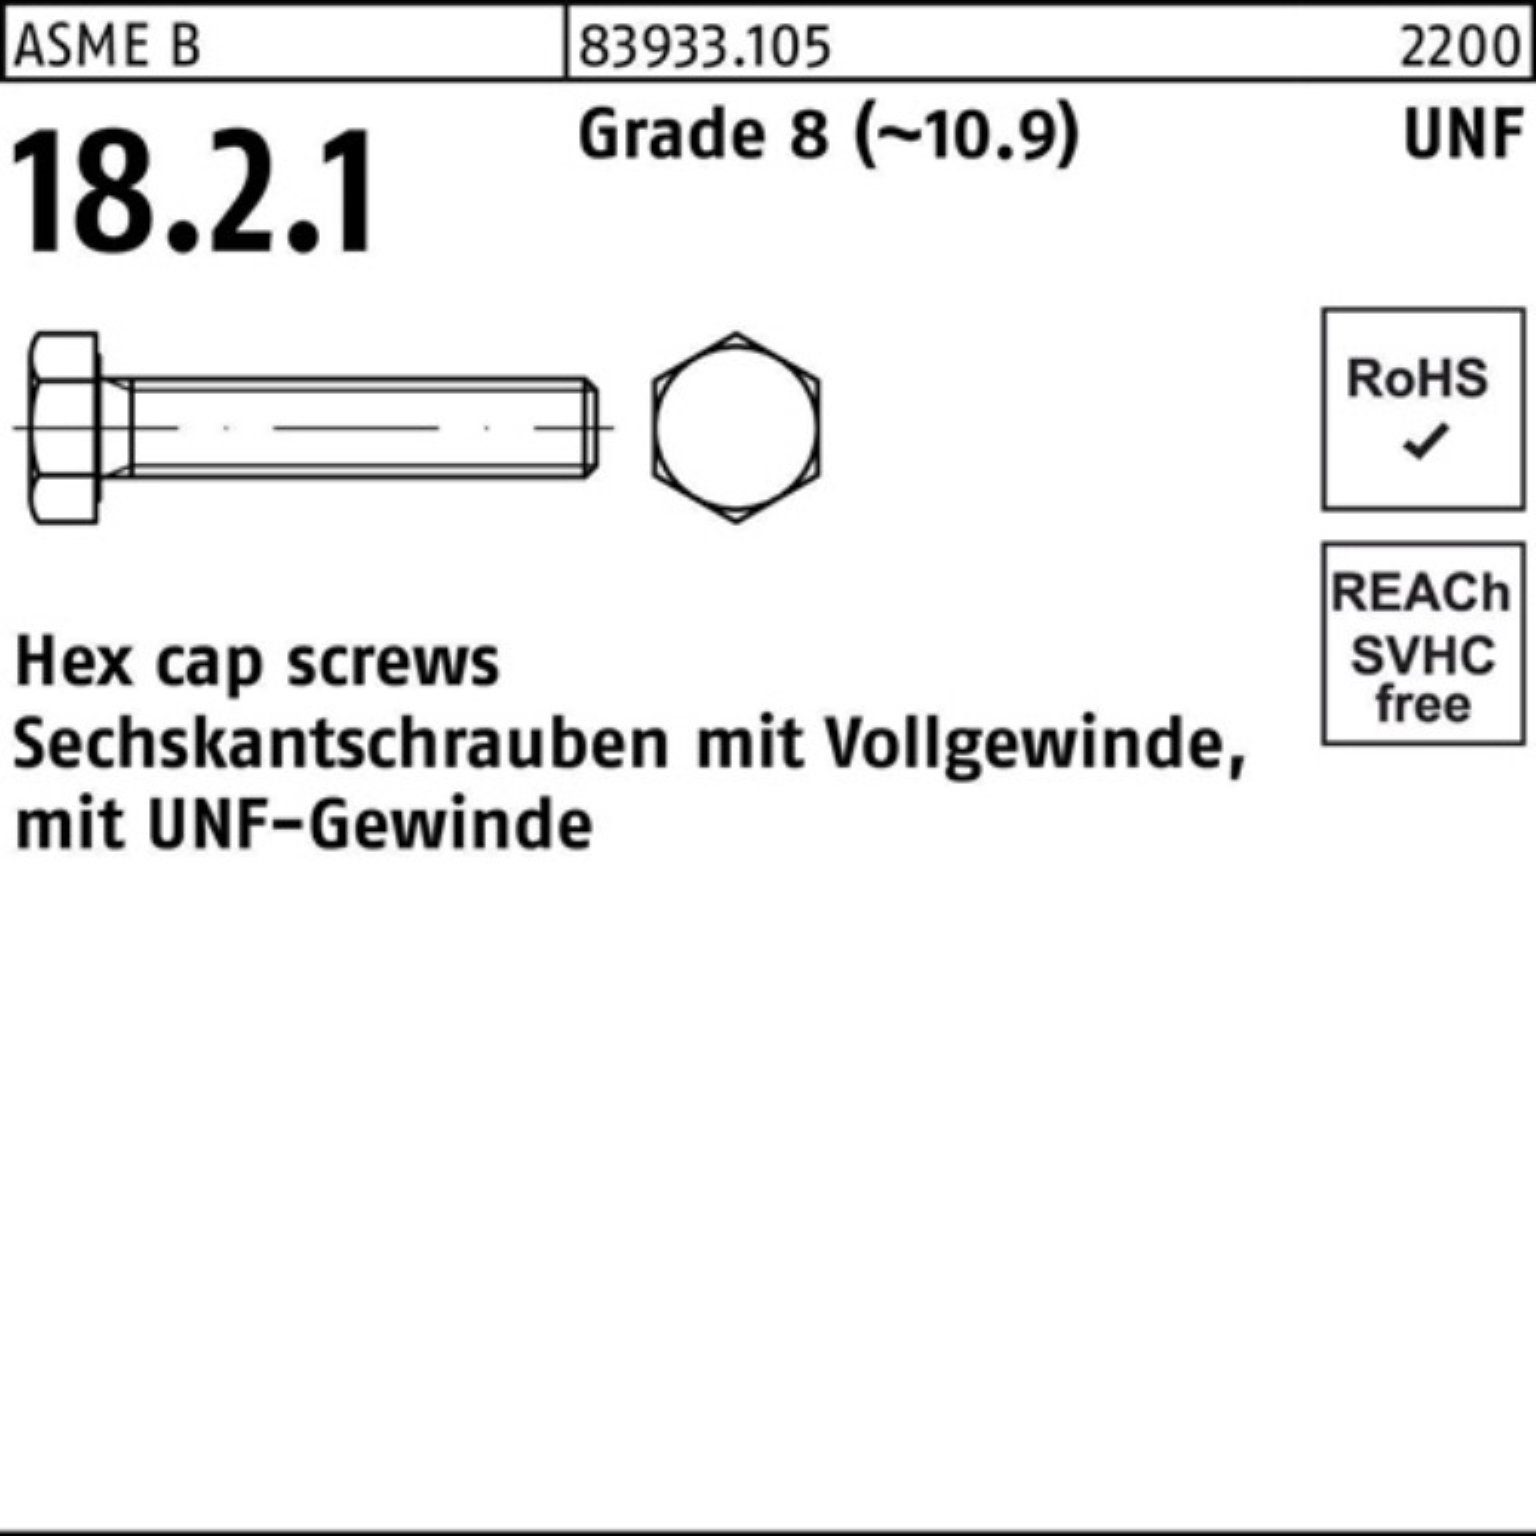 Grade VG Sechskantschraube 7/8 Pack R 100er 83933 UNF-Gewinde Sechskantschraube 8 Reyher 1/2x